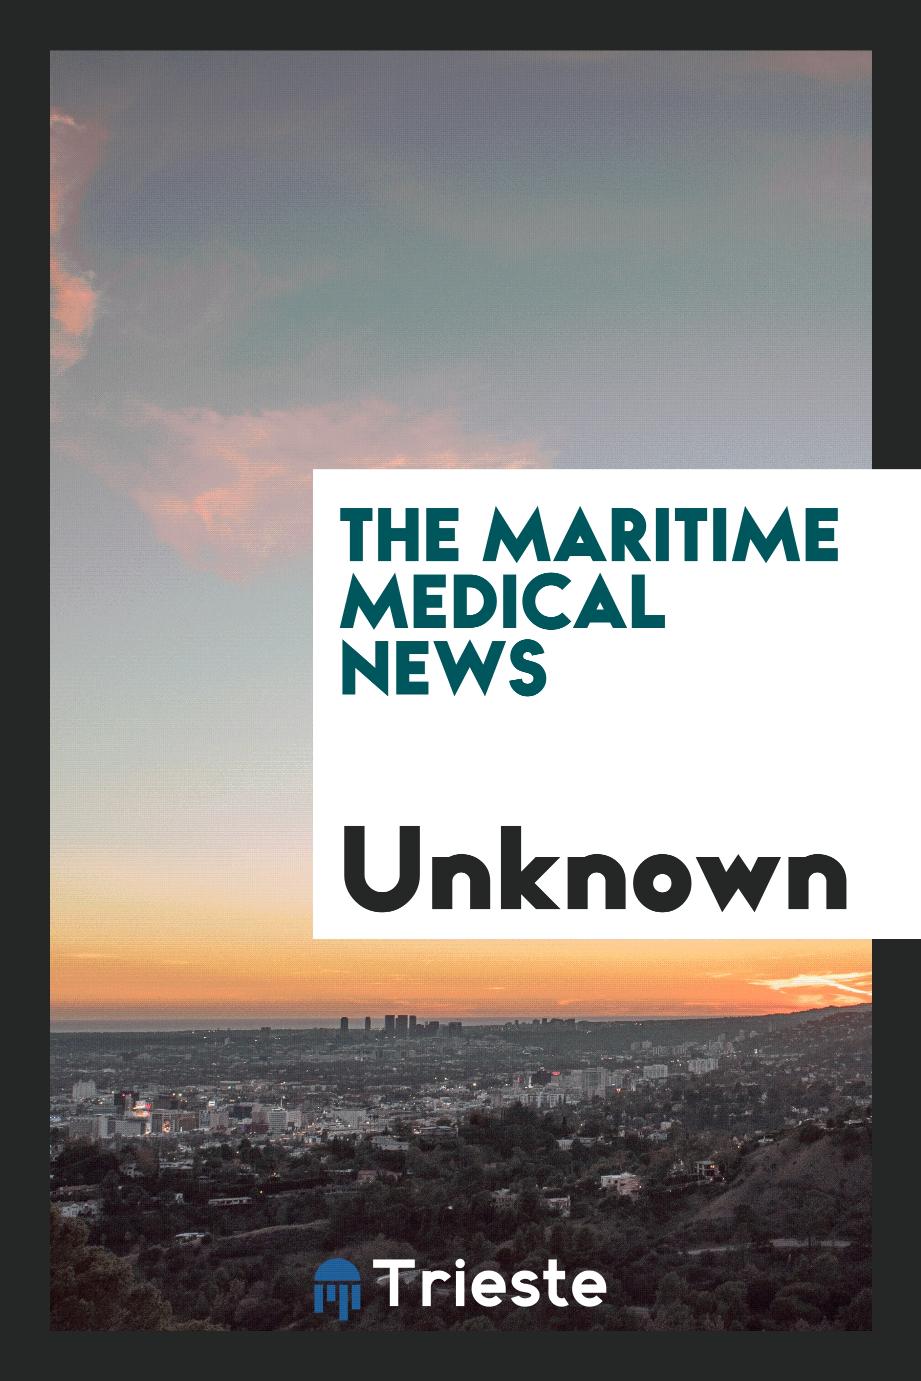 The Maritime medical news